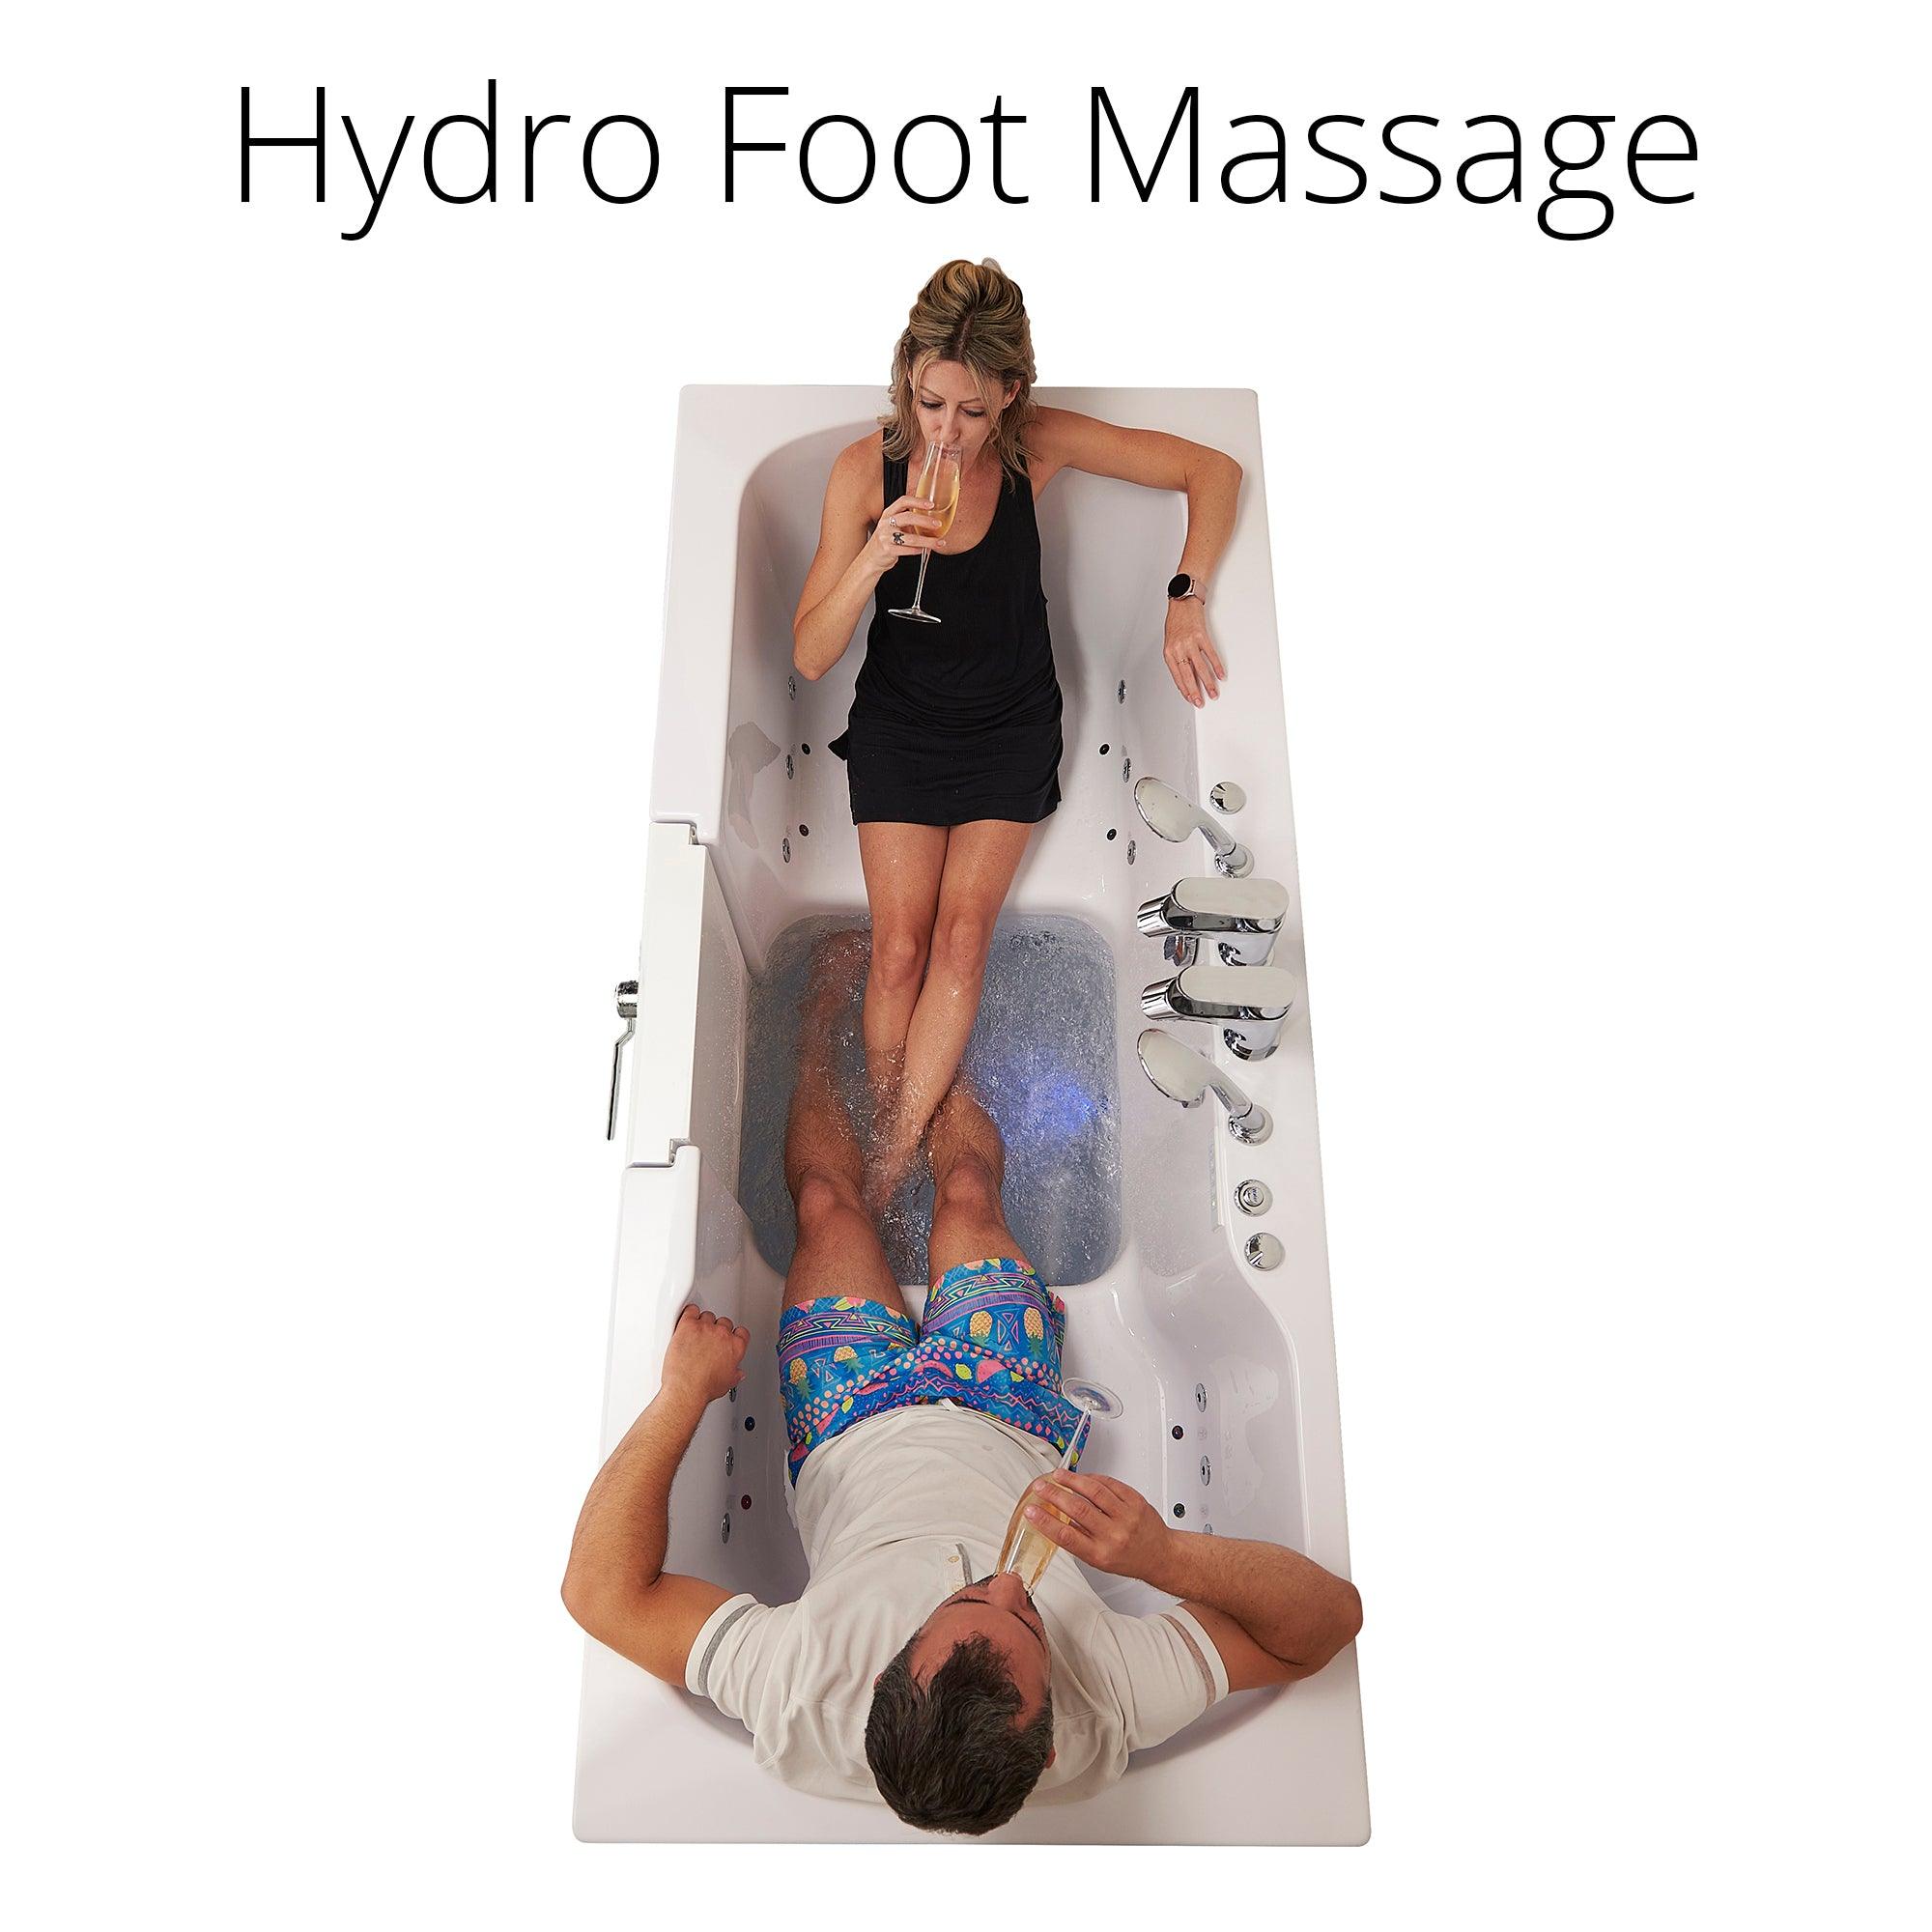 Ella Big4Two 36"x80" Hydro + Air Massage w/ Independent Foot Massage Two Seat Walk-In-Bathtub - Bathroom Design Center